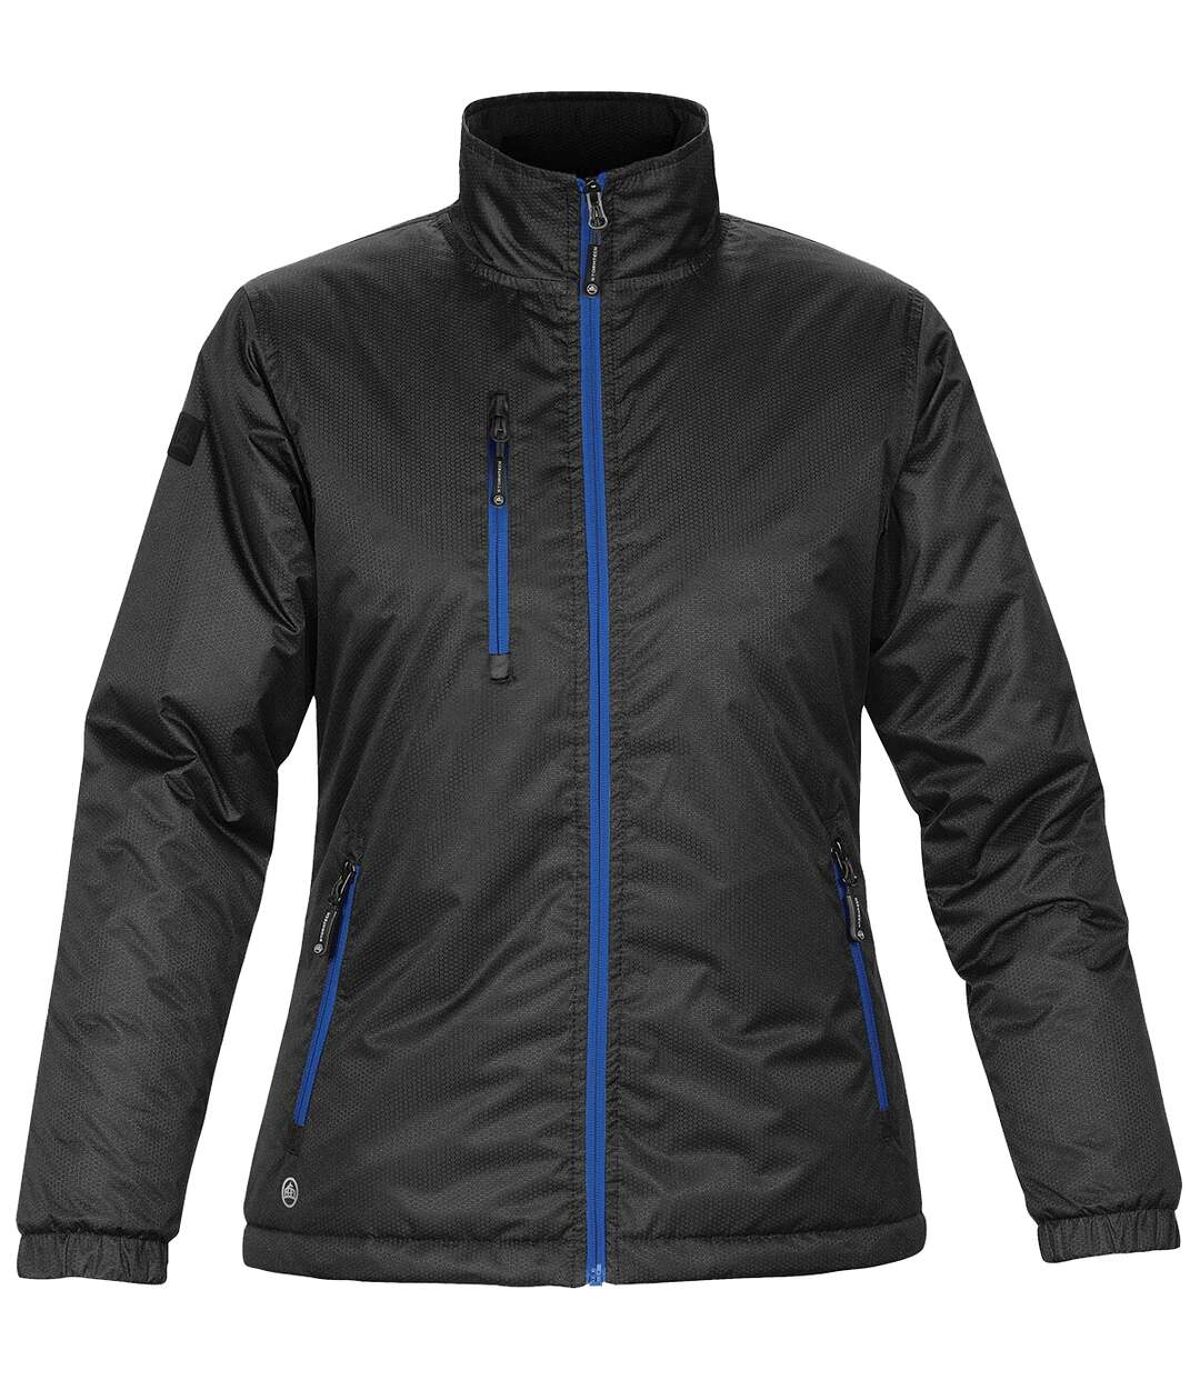 Stormtech Ladies/Womens Axis Water Resistant Jacket (Black/Royal) - UTBC2080